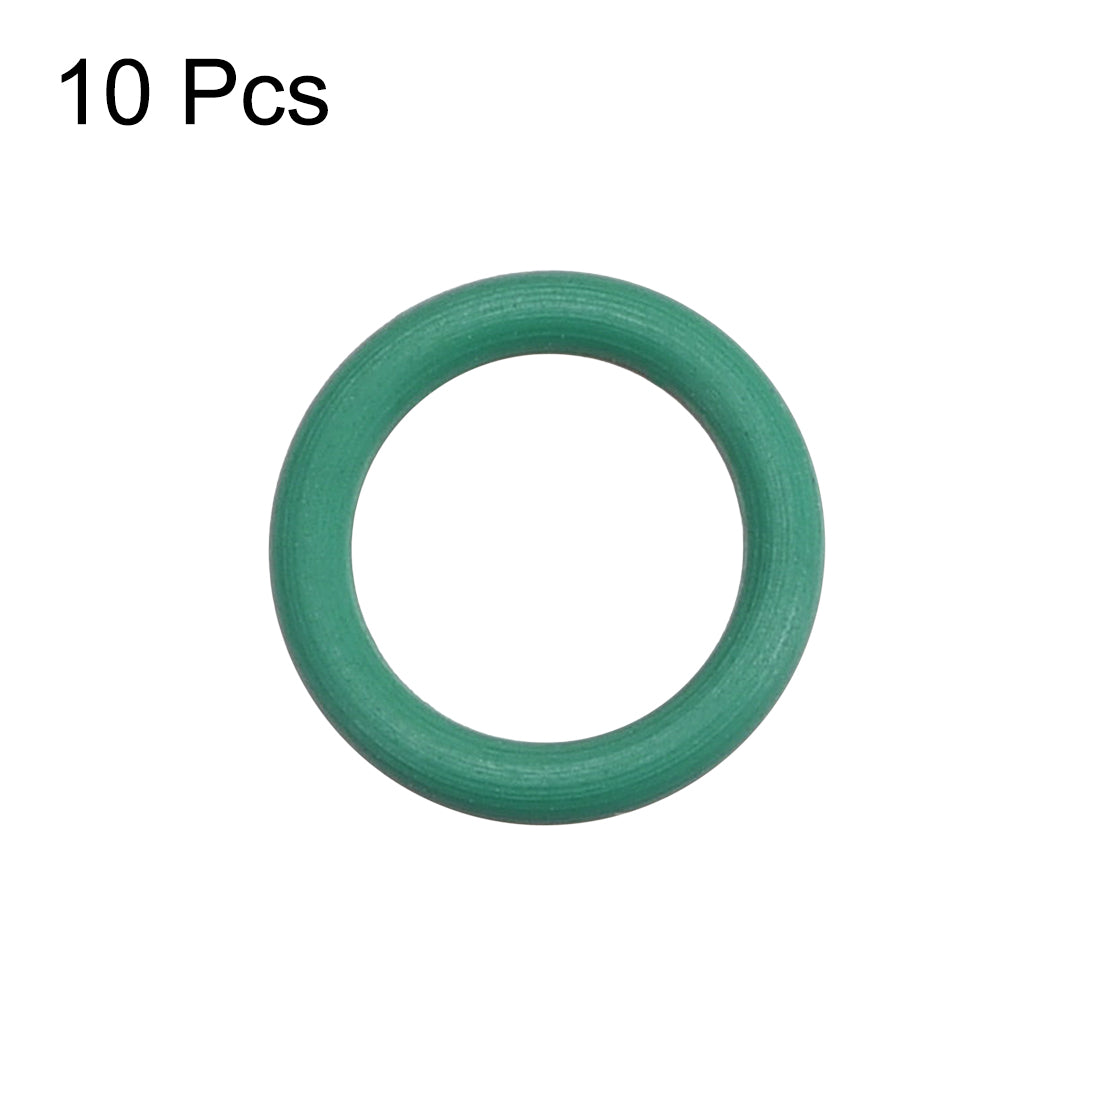 uxcell Uxcell Fluorine Rubber O Rings, 10mm OD, 7mm Inner Diameter, 1.5mm Width, Seal Gasket Green 10Pcs